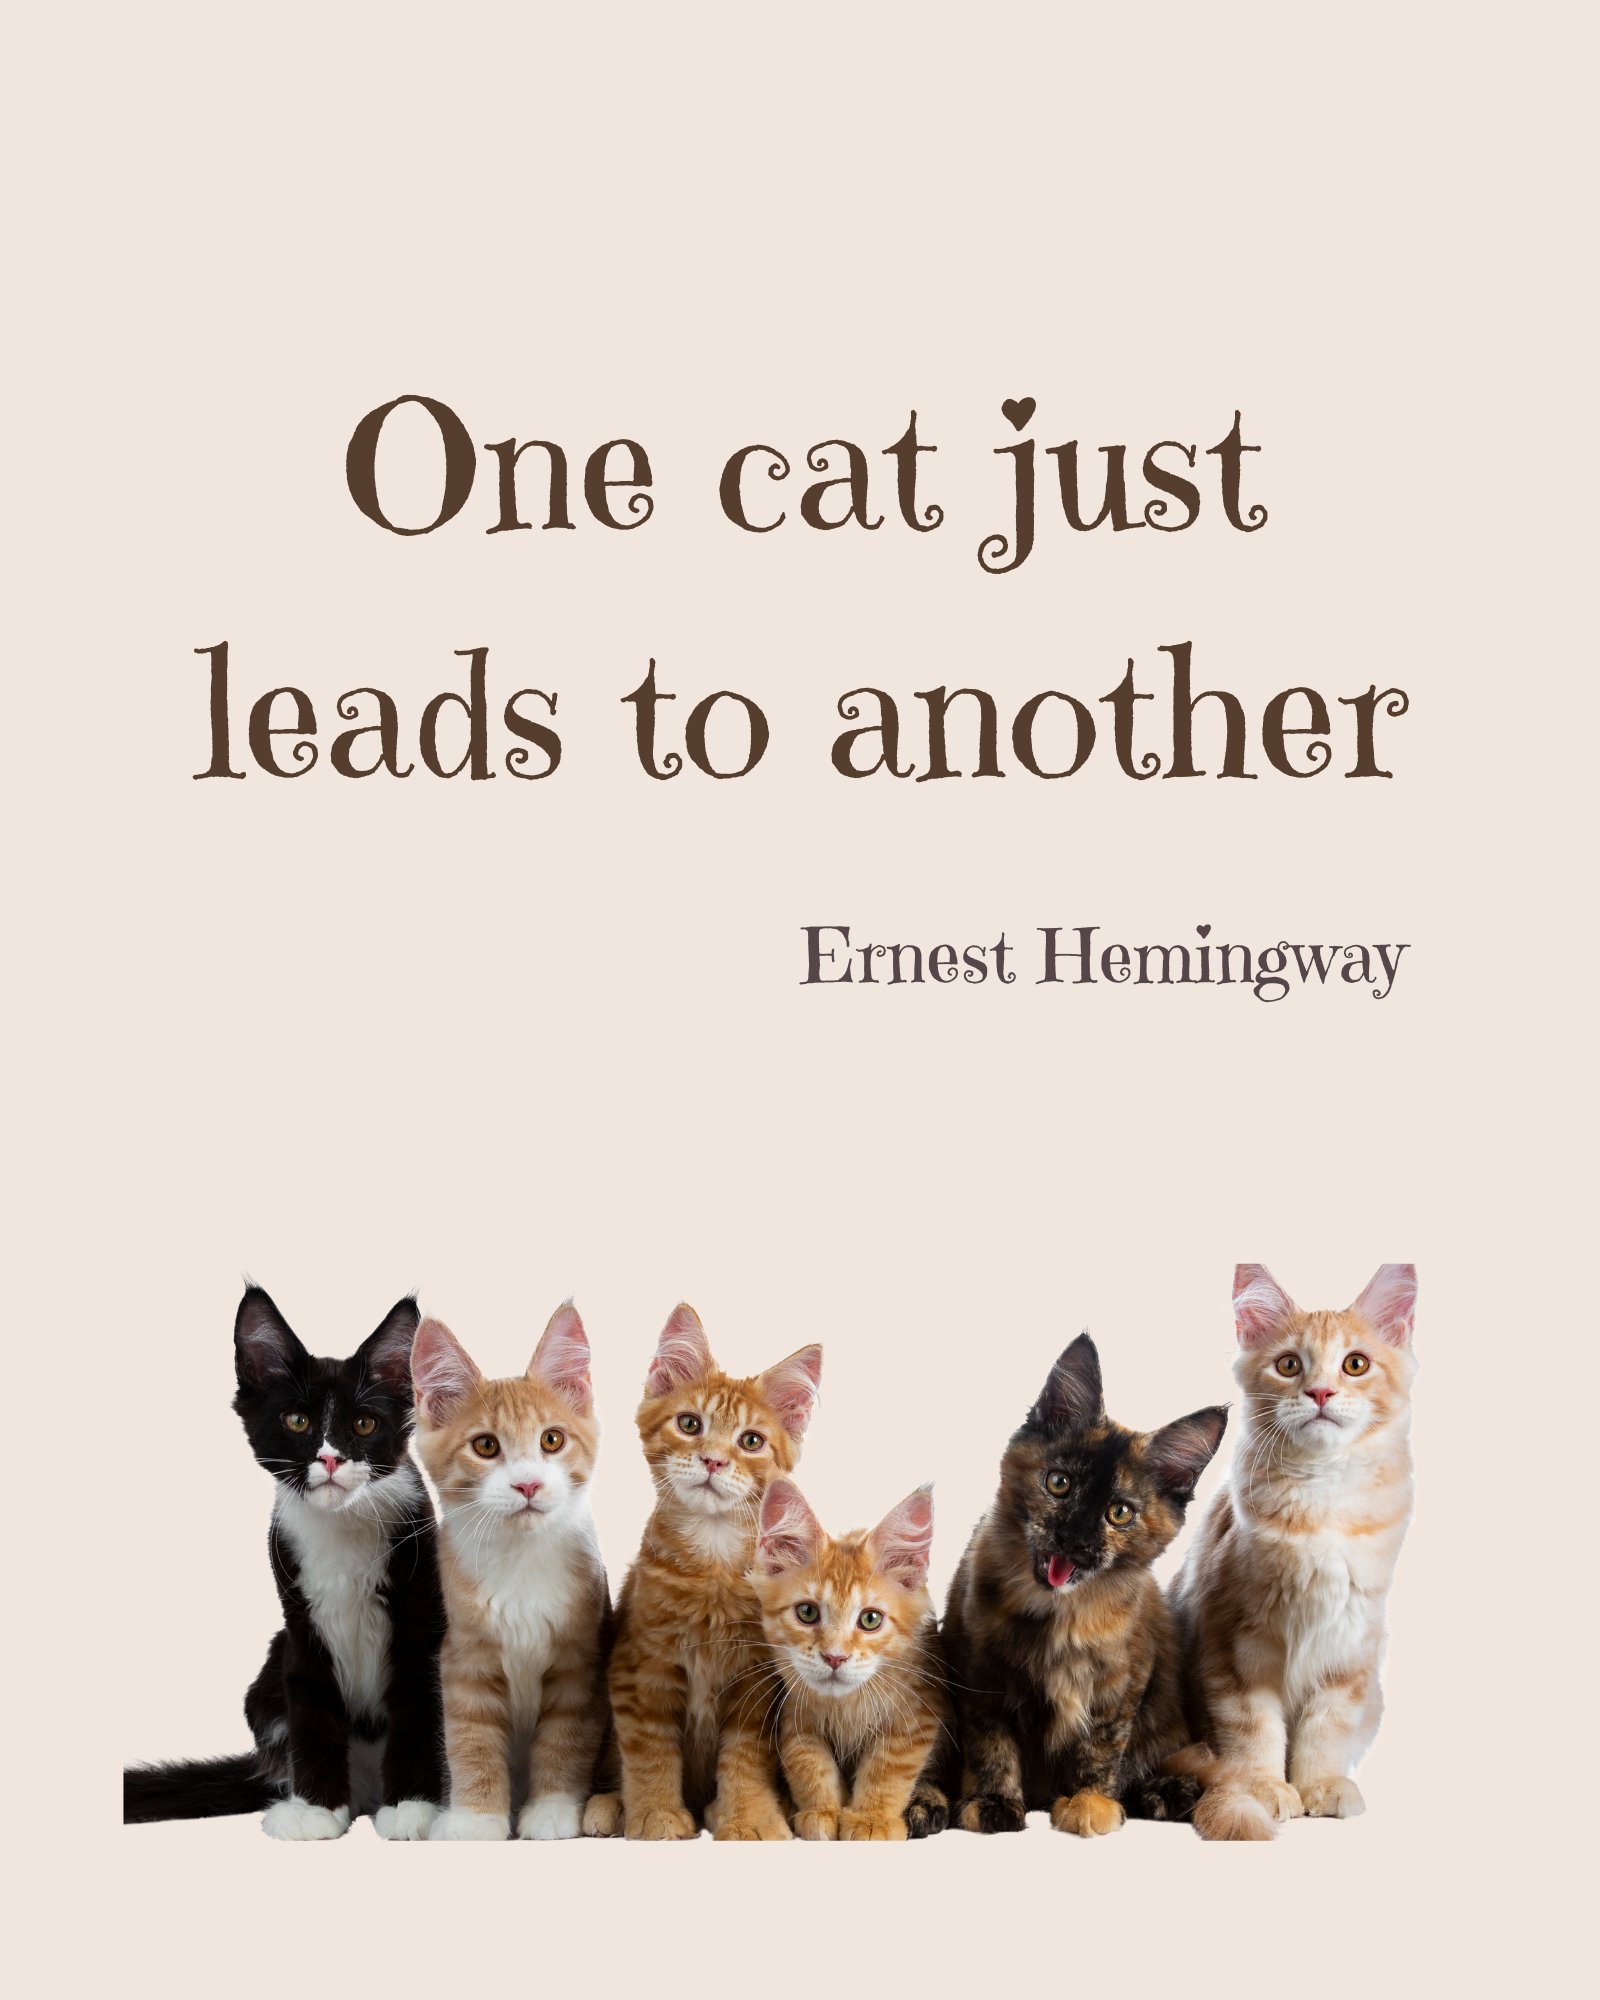 Famous quotes - Ernest Hemingway Cat quote